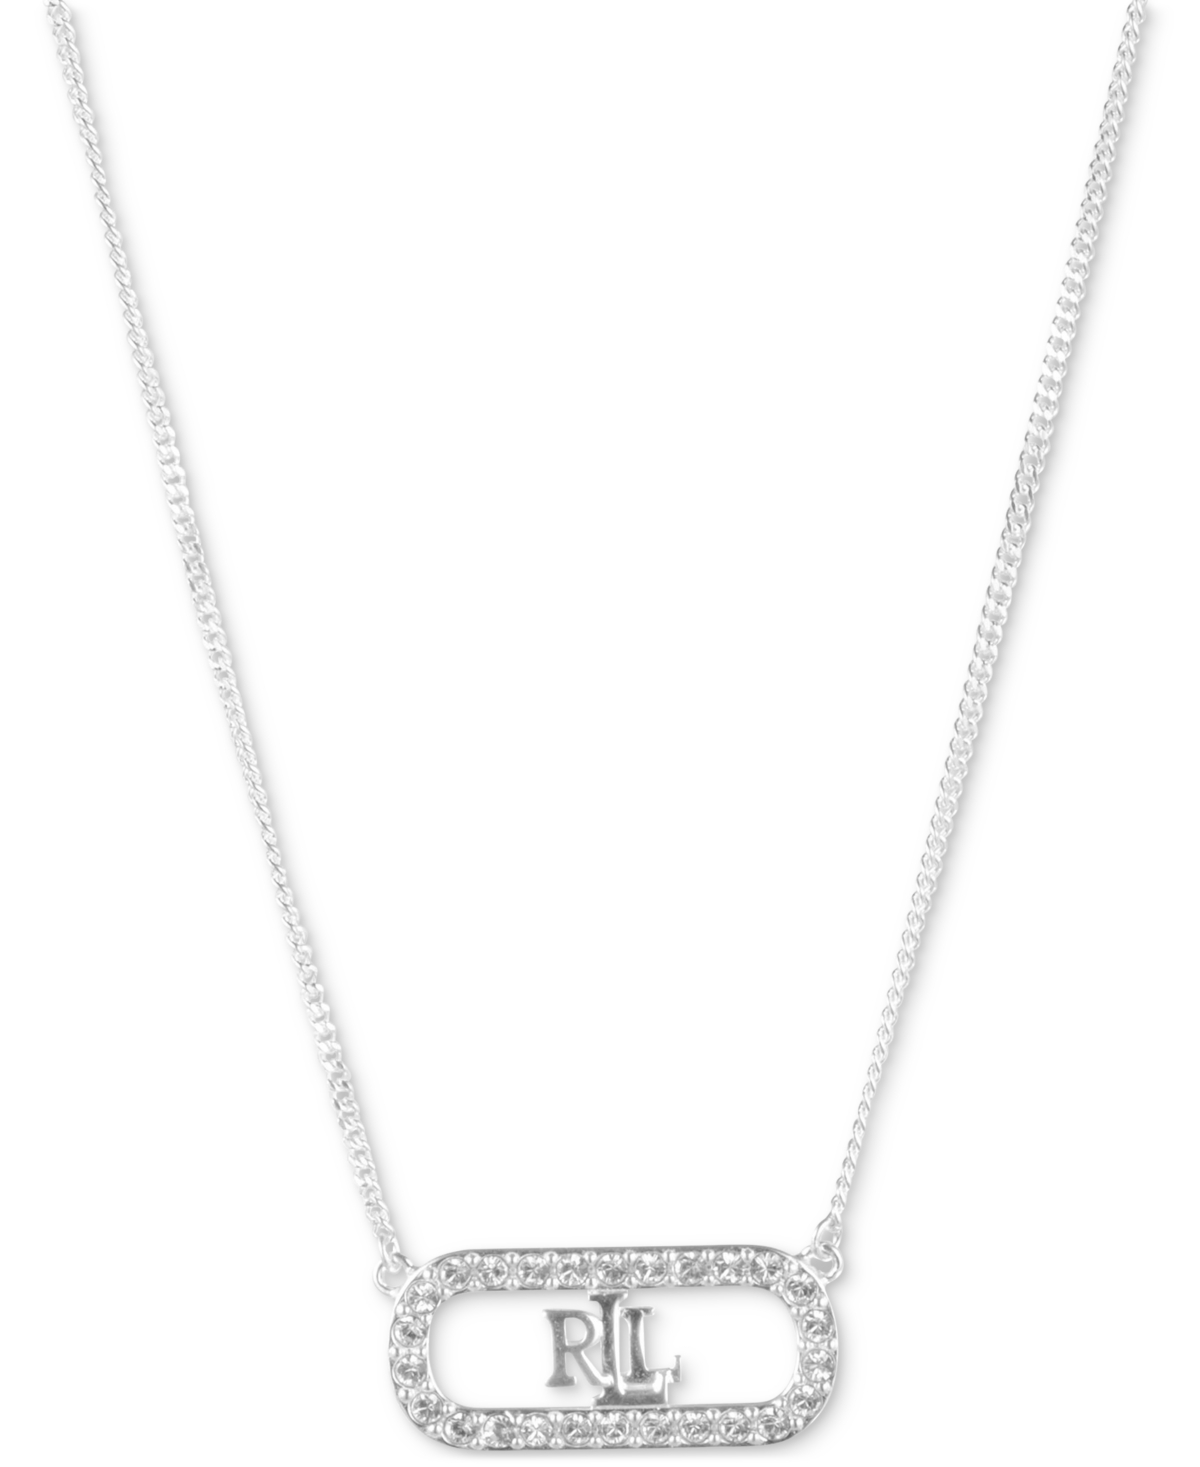 Lauren Ralph Lauren Crystal Halo Logo Pendant Necklace in Sterling Silver, 15" + 3" extender - Sterling Silver